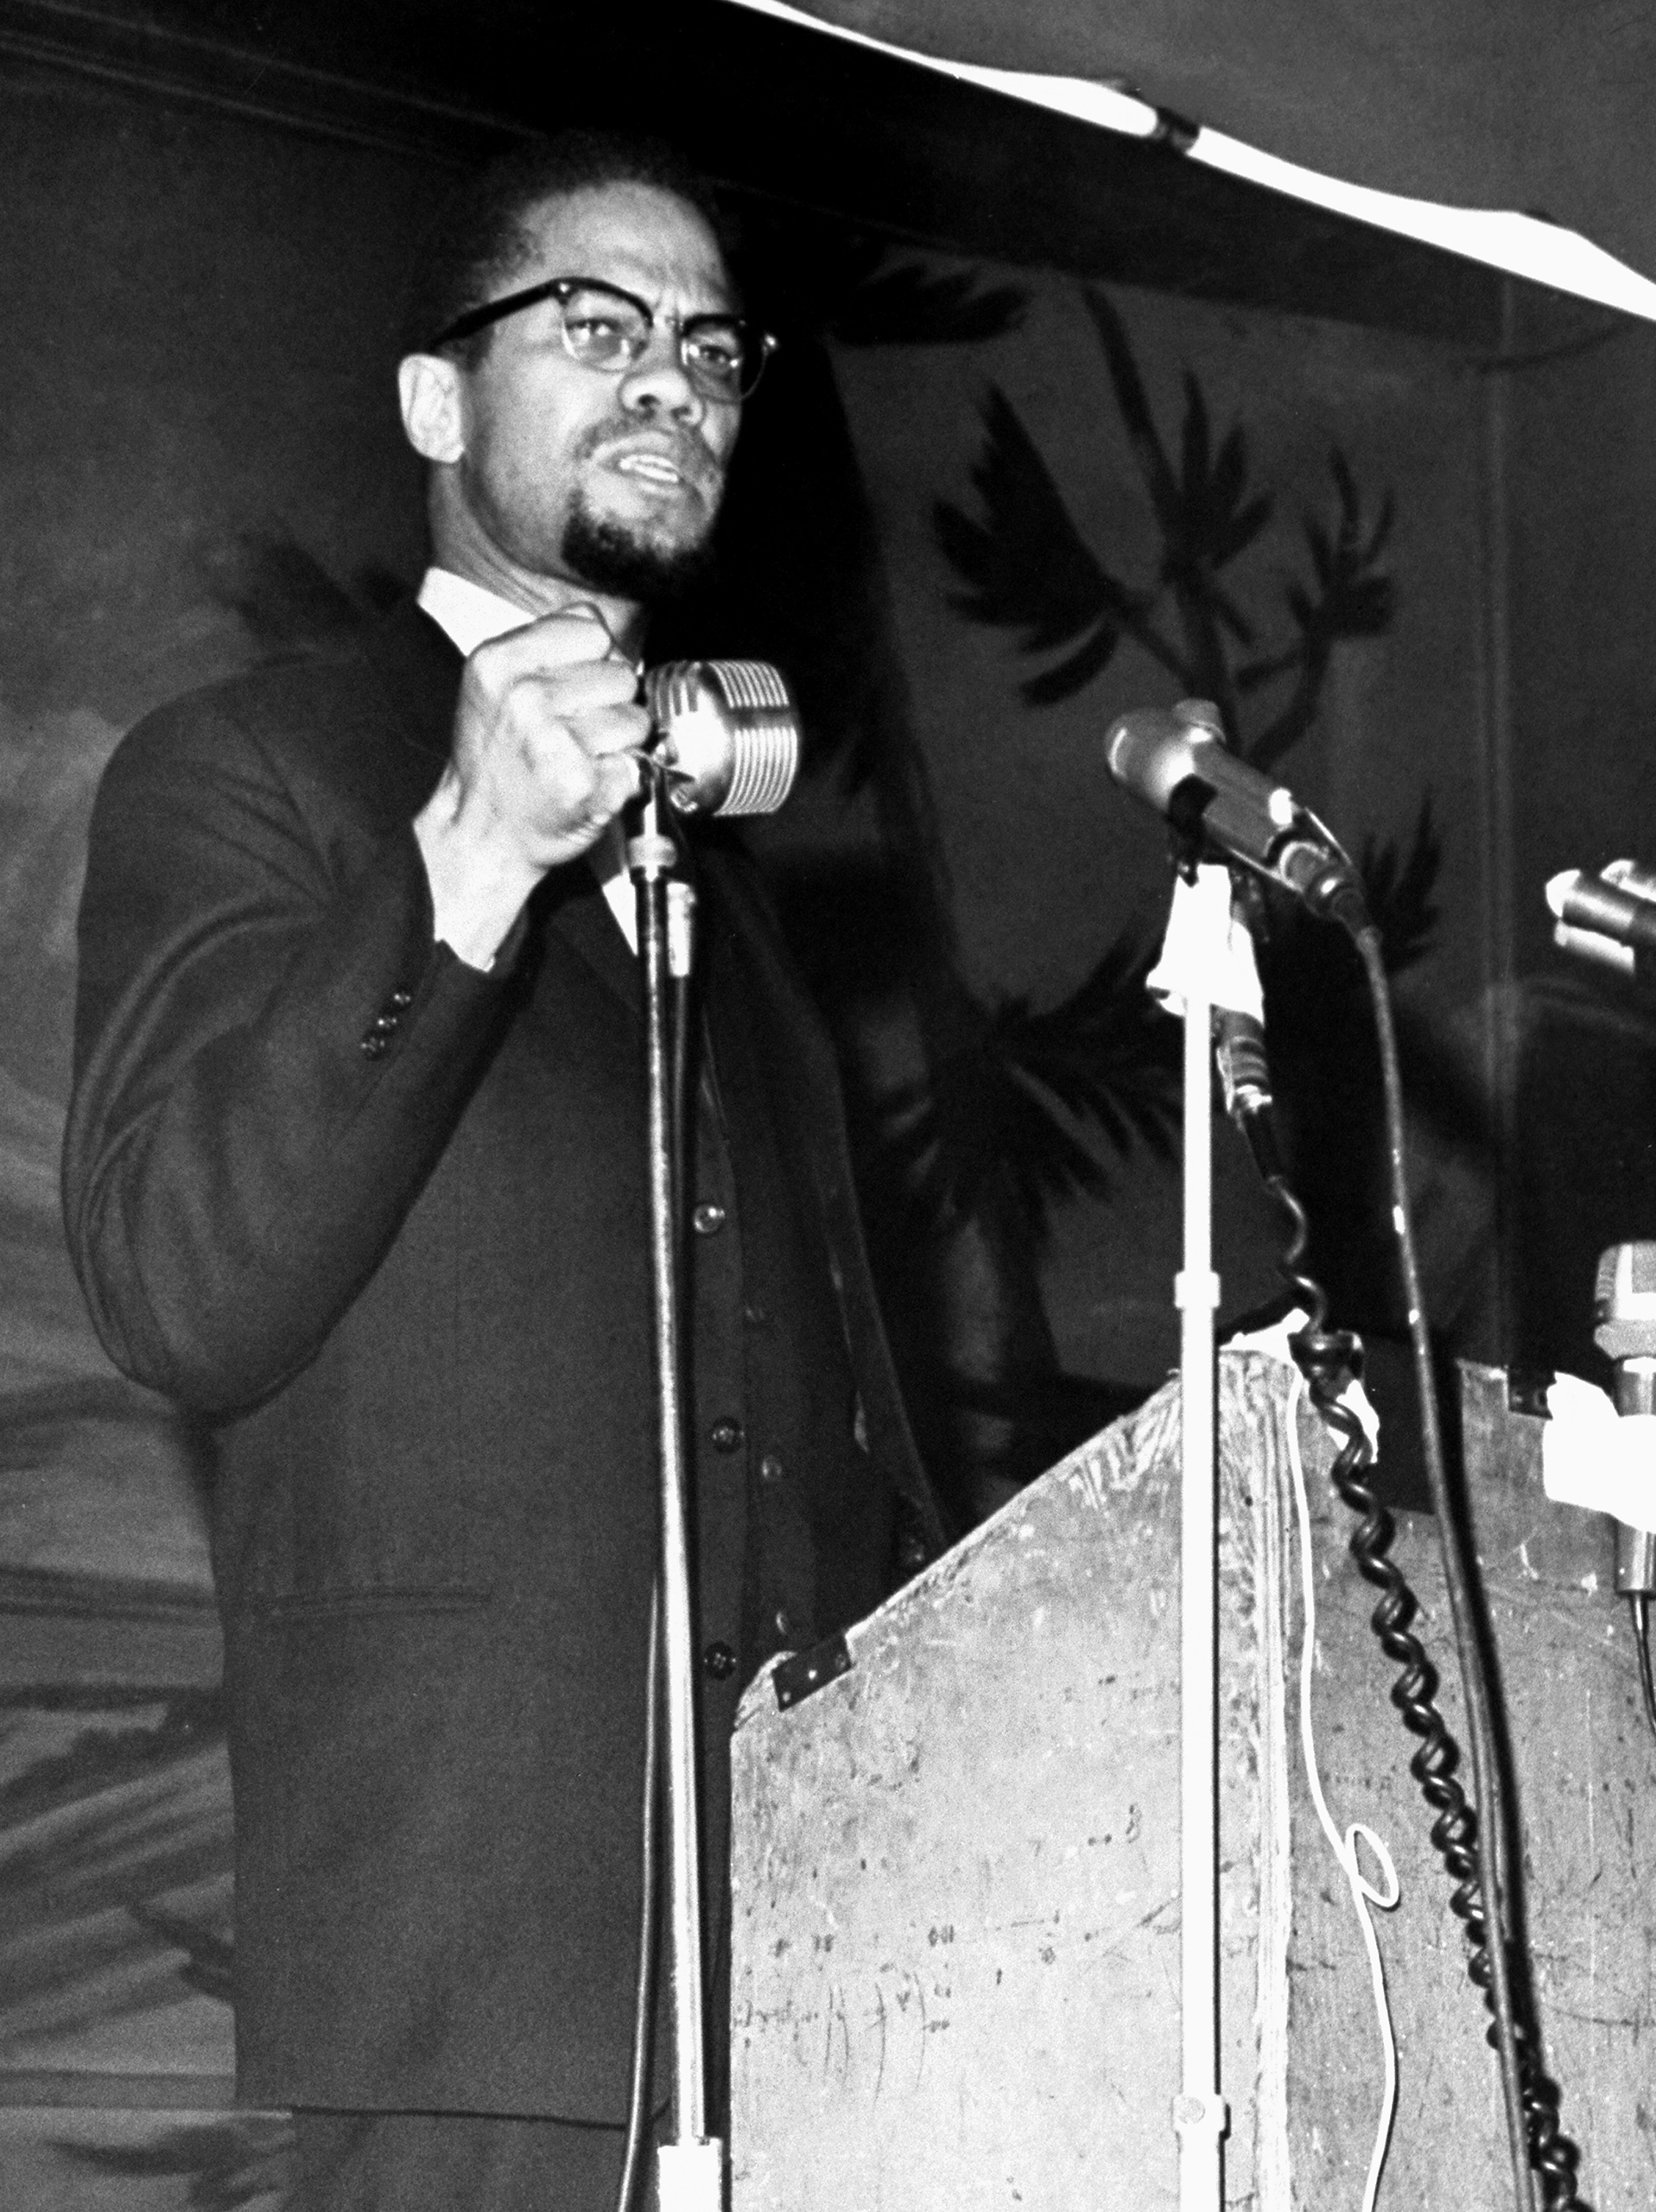 Malcolm X speaks at the Audubon Ballroom in Harlem on Feb. 15, 1965.